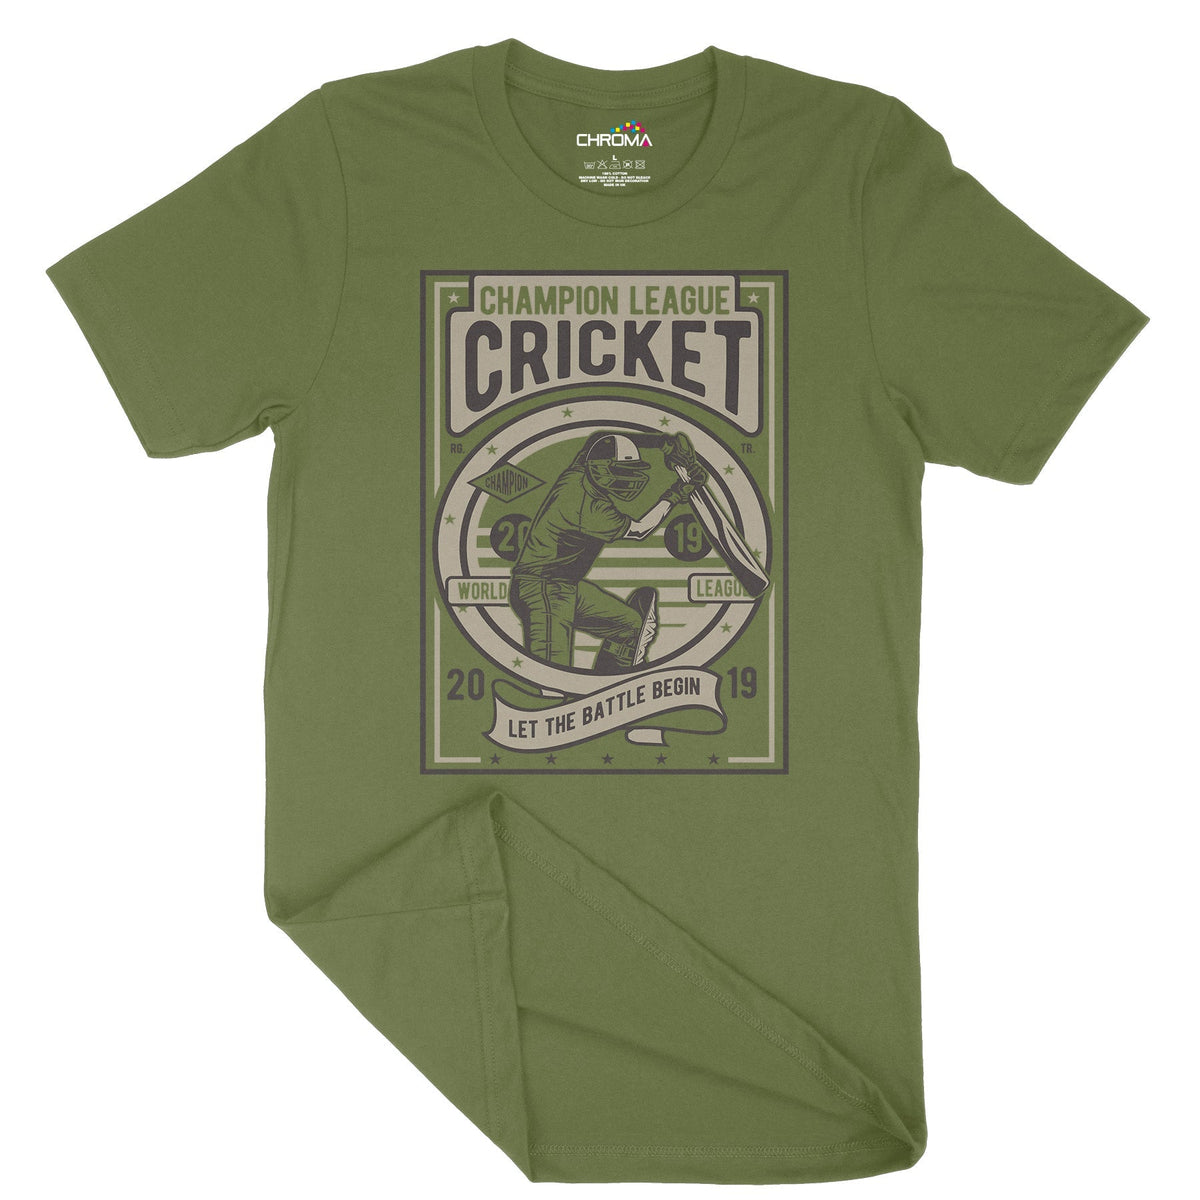 Champion League Cricket | Vintage Adult T-Shirt | Classic Vintage Clot Chroma Clothing